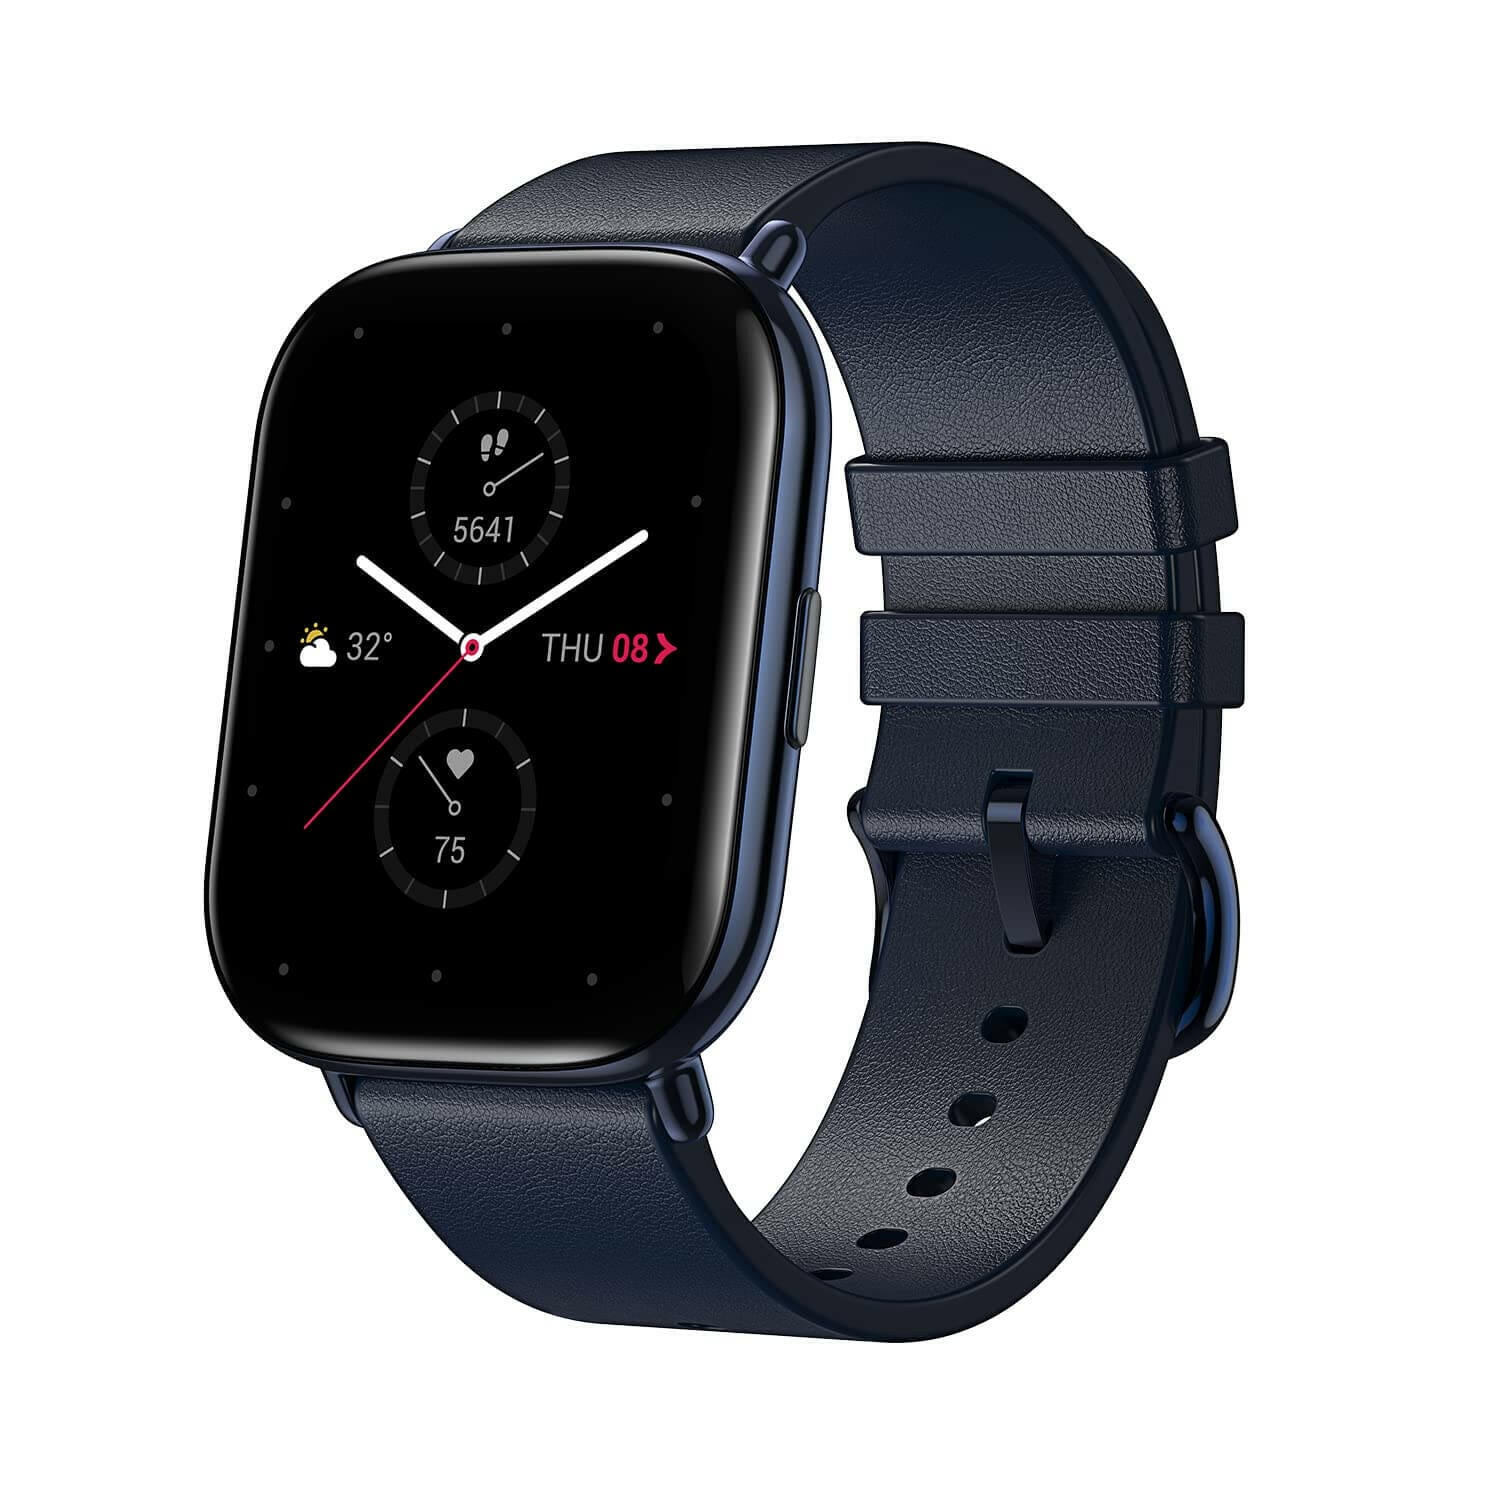 Buy Zepp E Square Smart Watch @ ₹4999.0 | Amazfit India Store